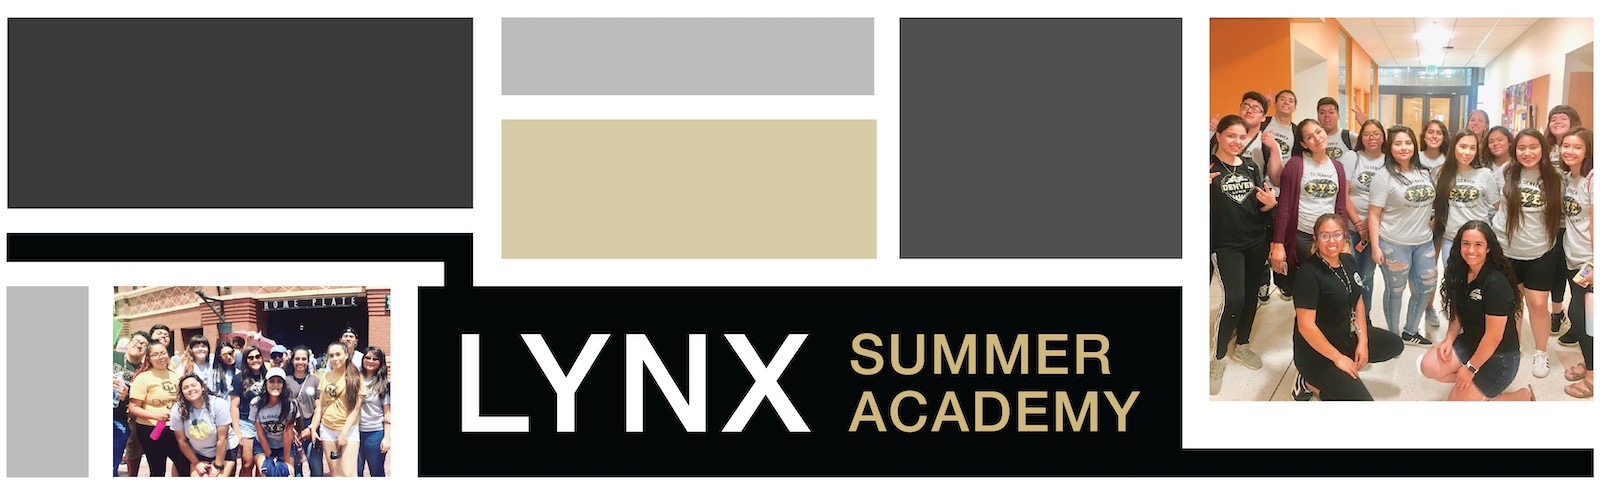 CU Denver Students at the Lynx Summer Academy